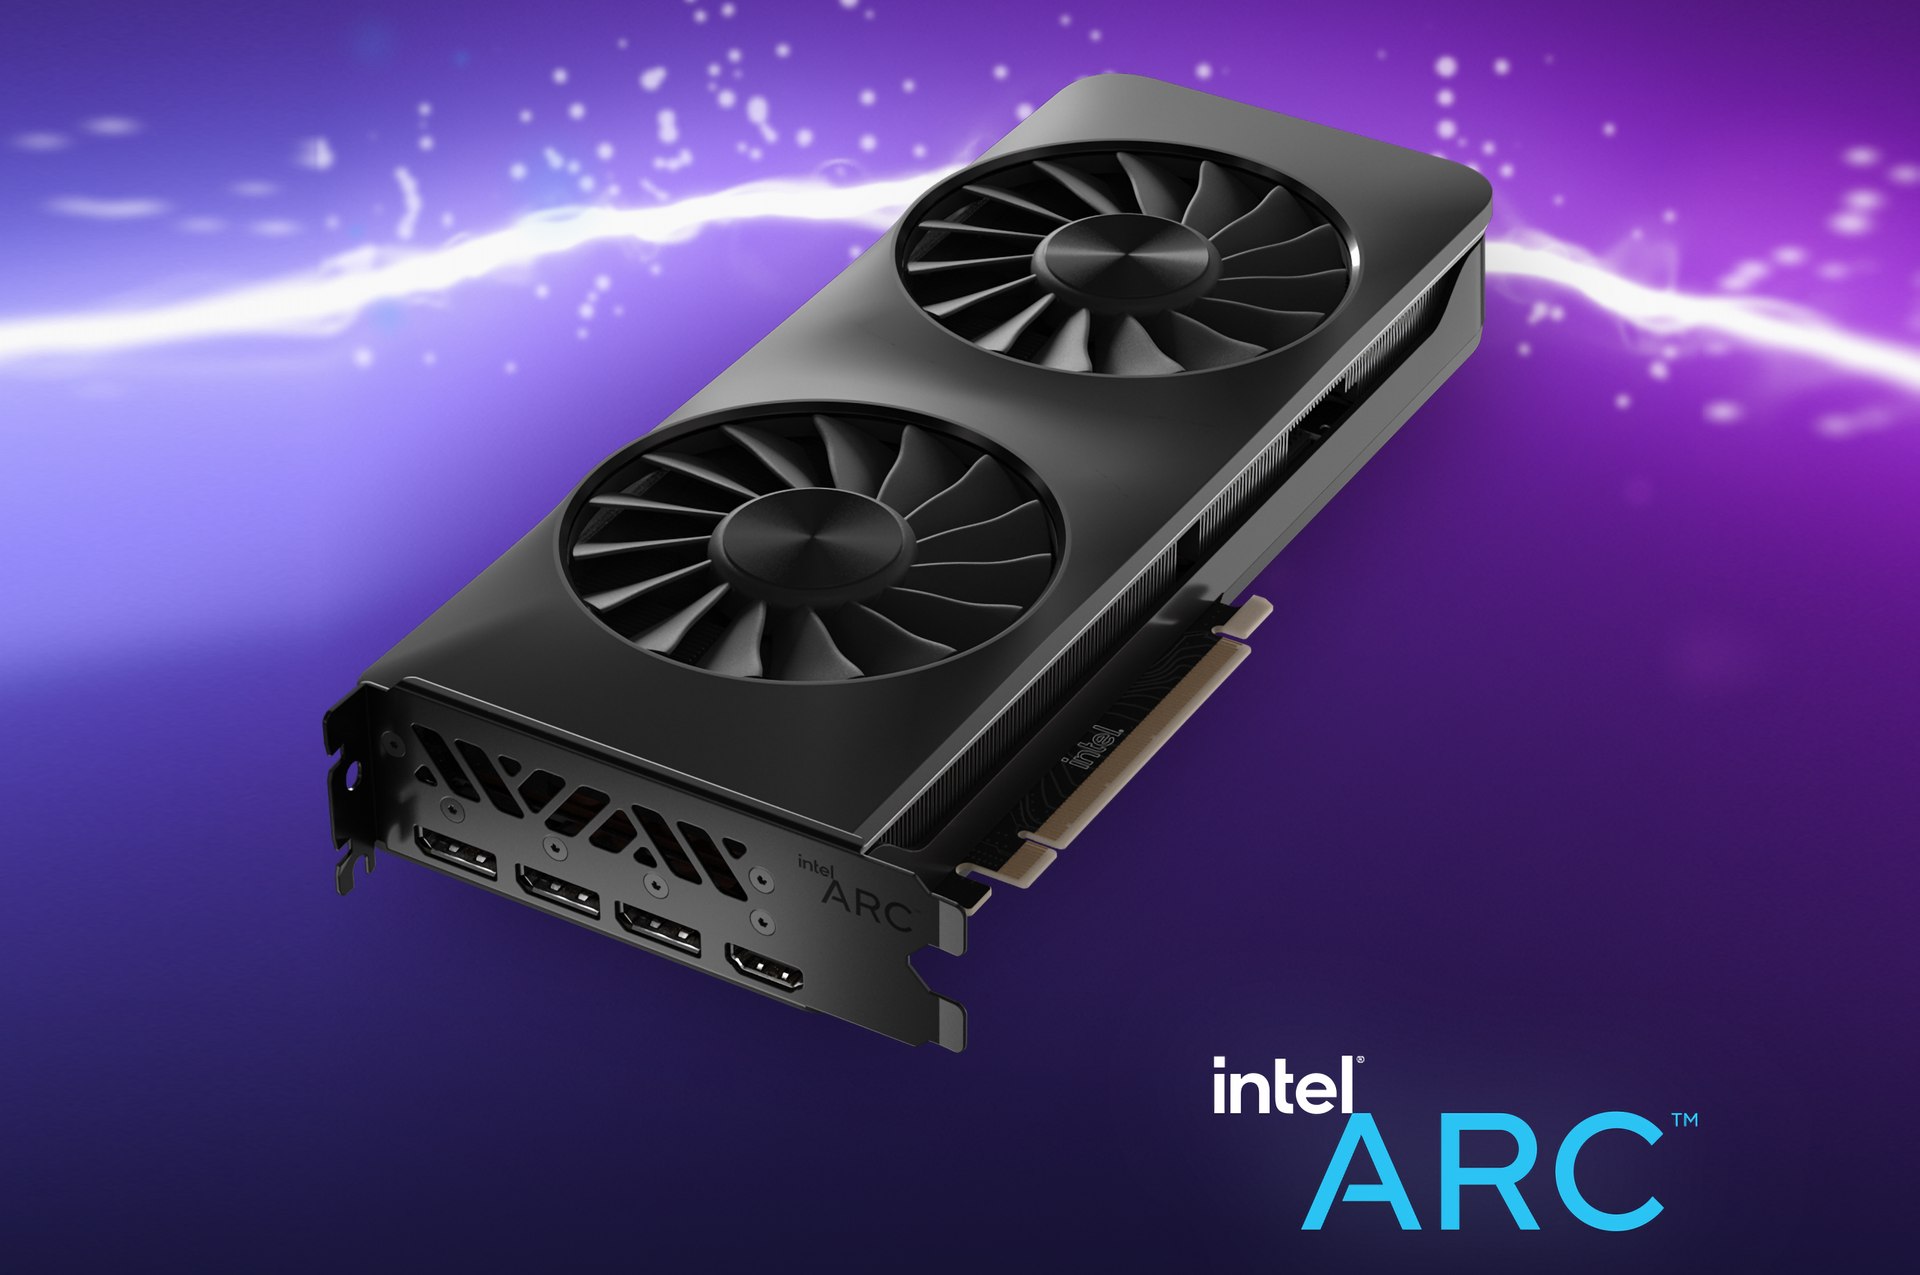 A Creative Arc By Intel: A750 & A770 GPU Workstation Performance